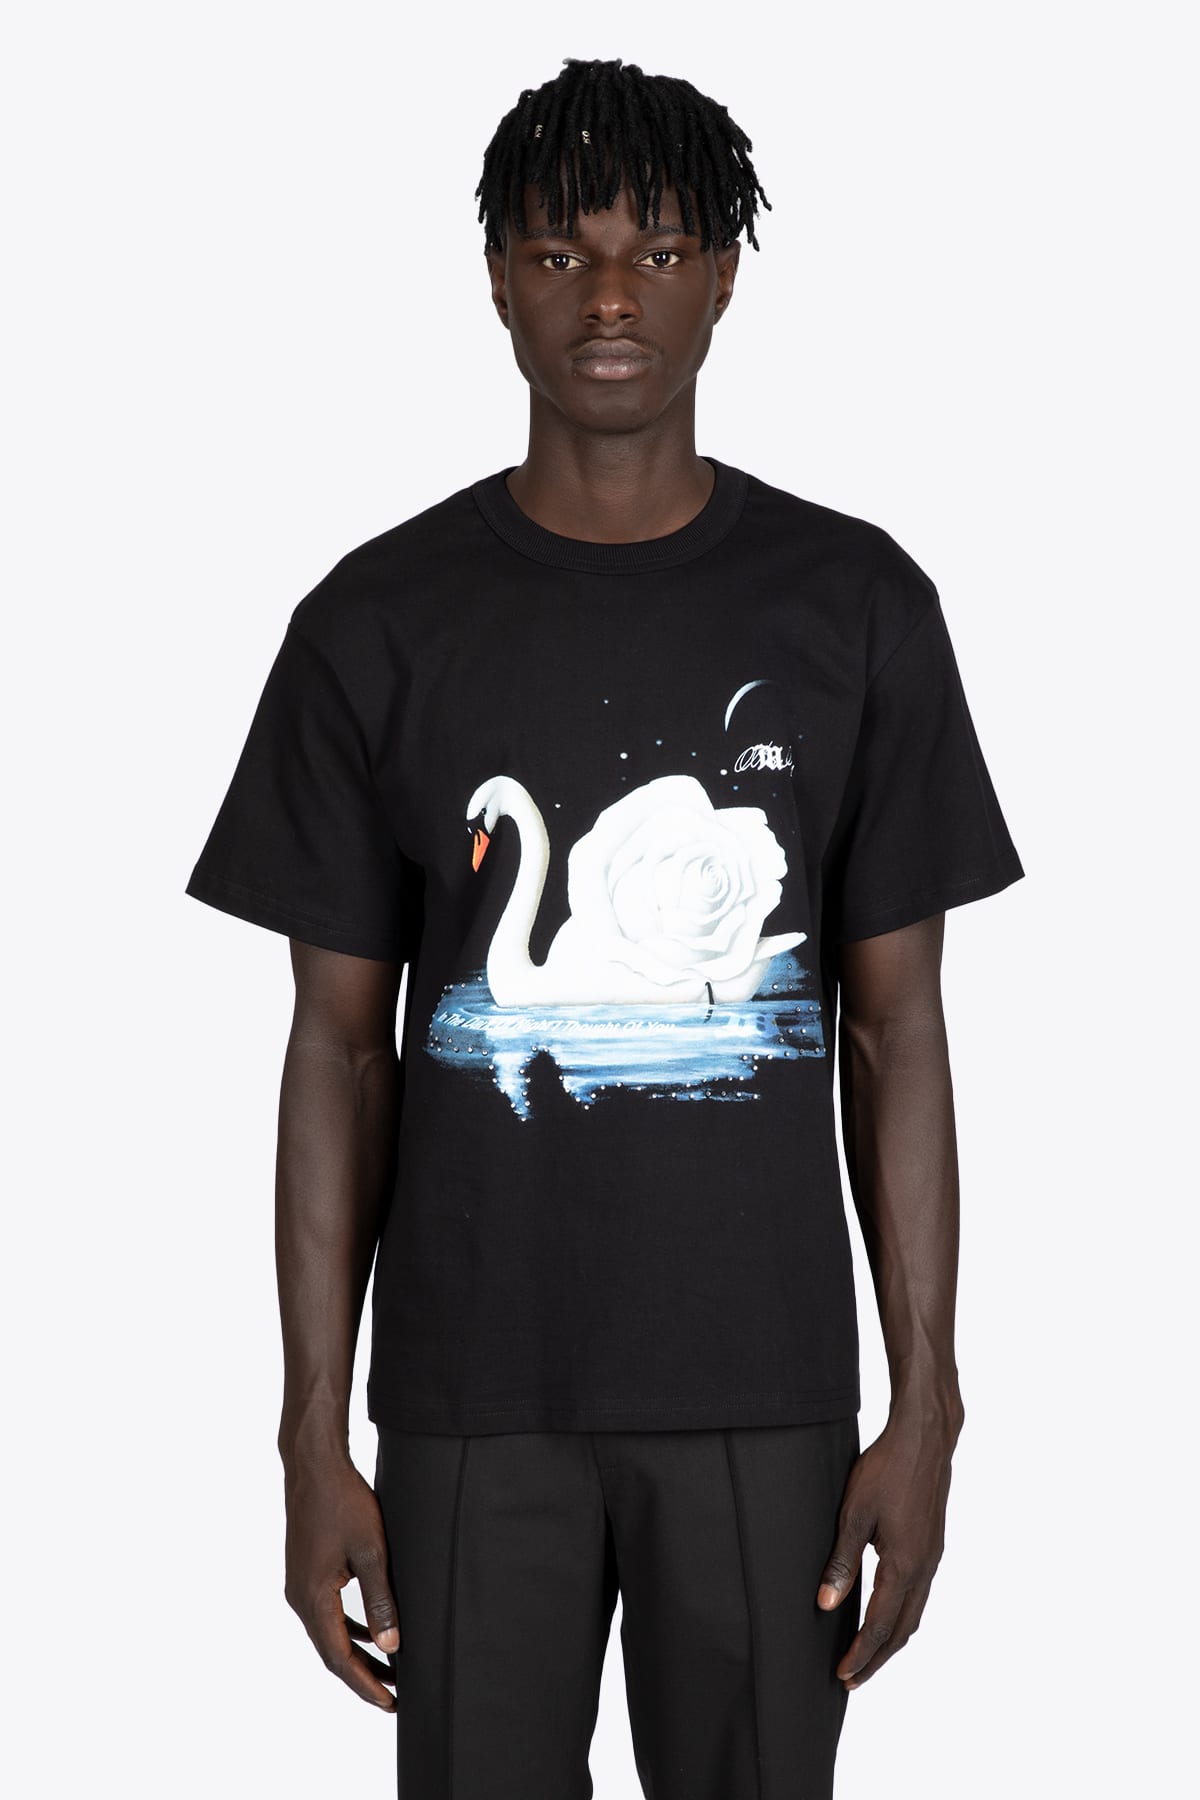 MISBHV Night Swan T-shirt Black cotton t-shirt with night swan print